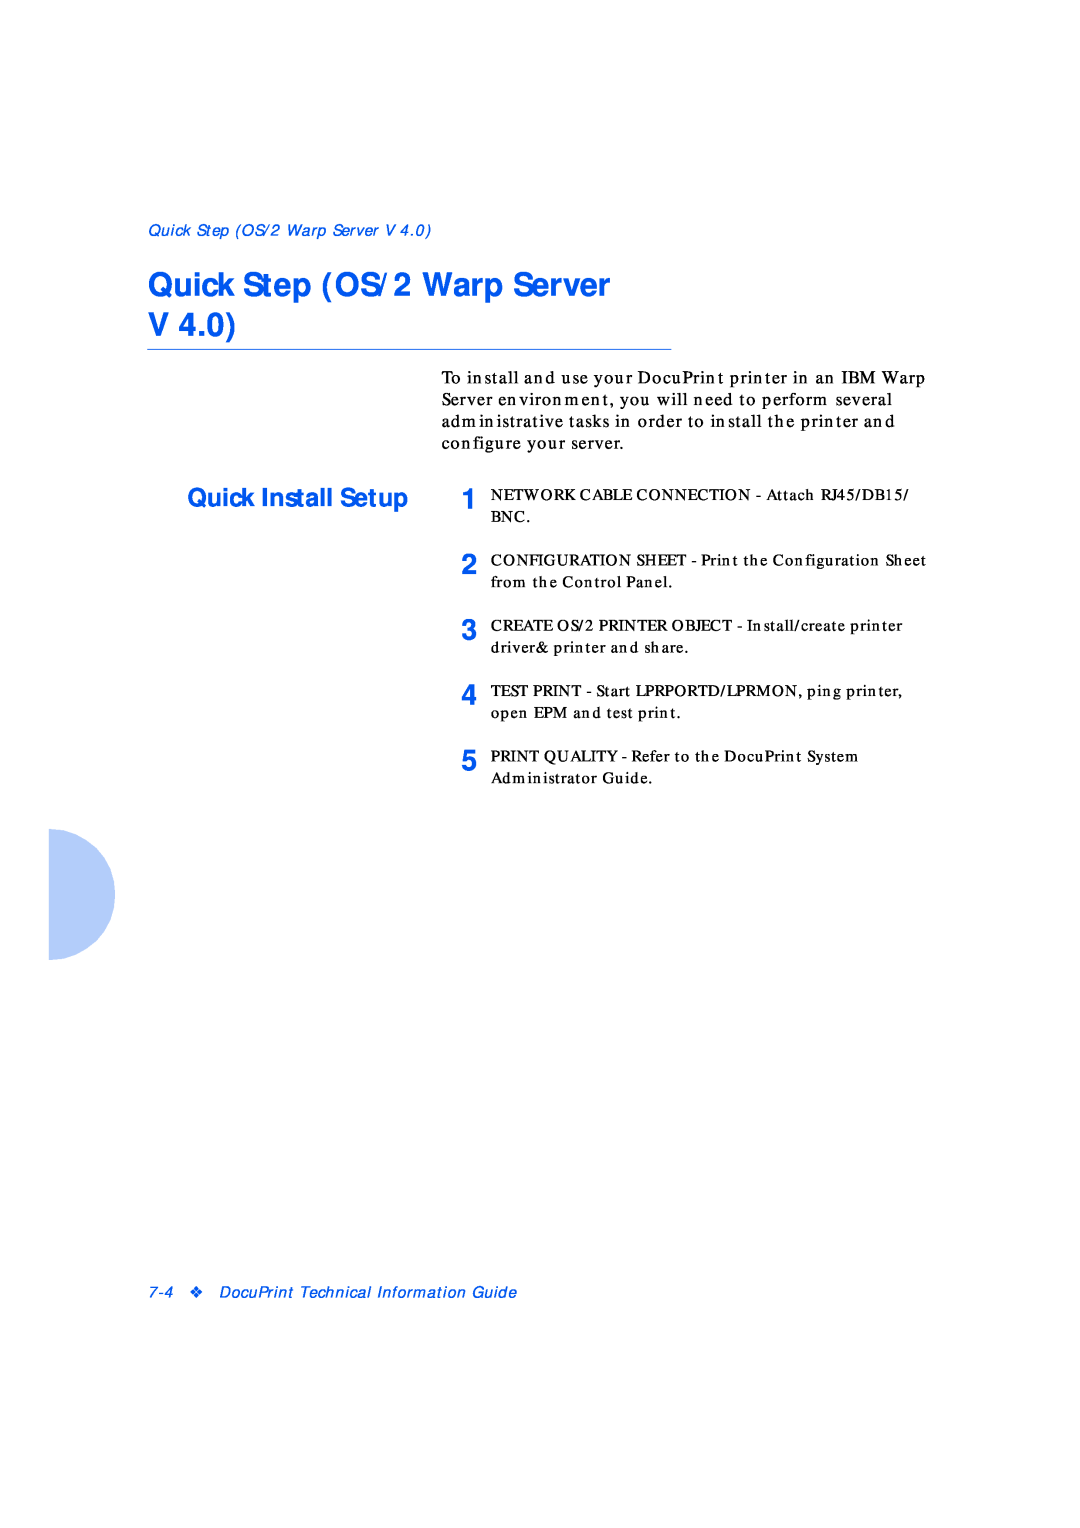 Xerox Network Laser Printers manual Quick Step OS/2 Warp Server, Quick Install Setup, DocuPrint Technical Information Guide 